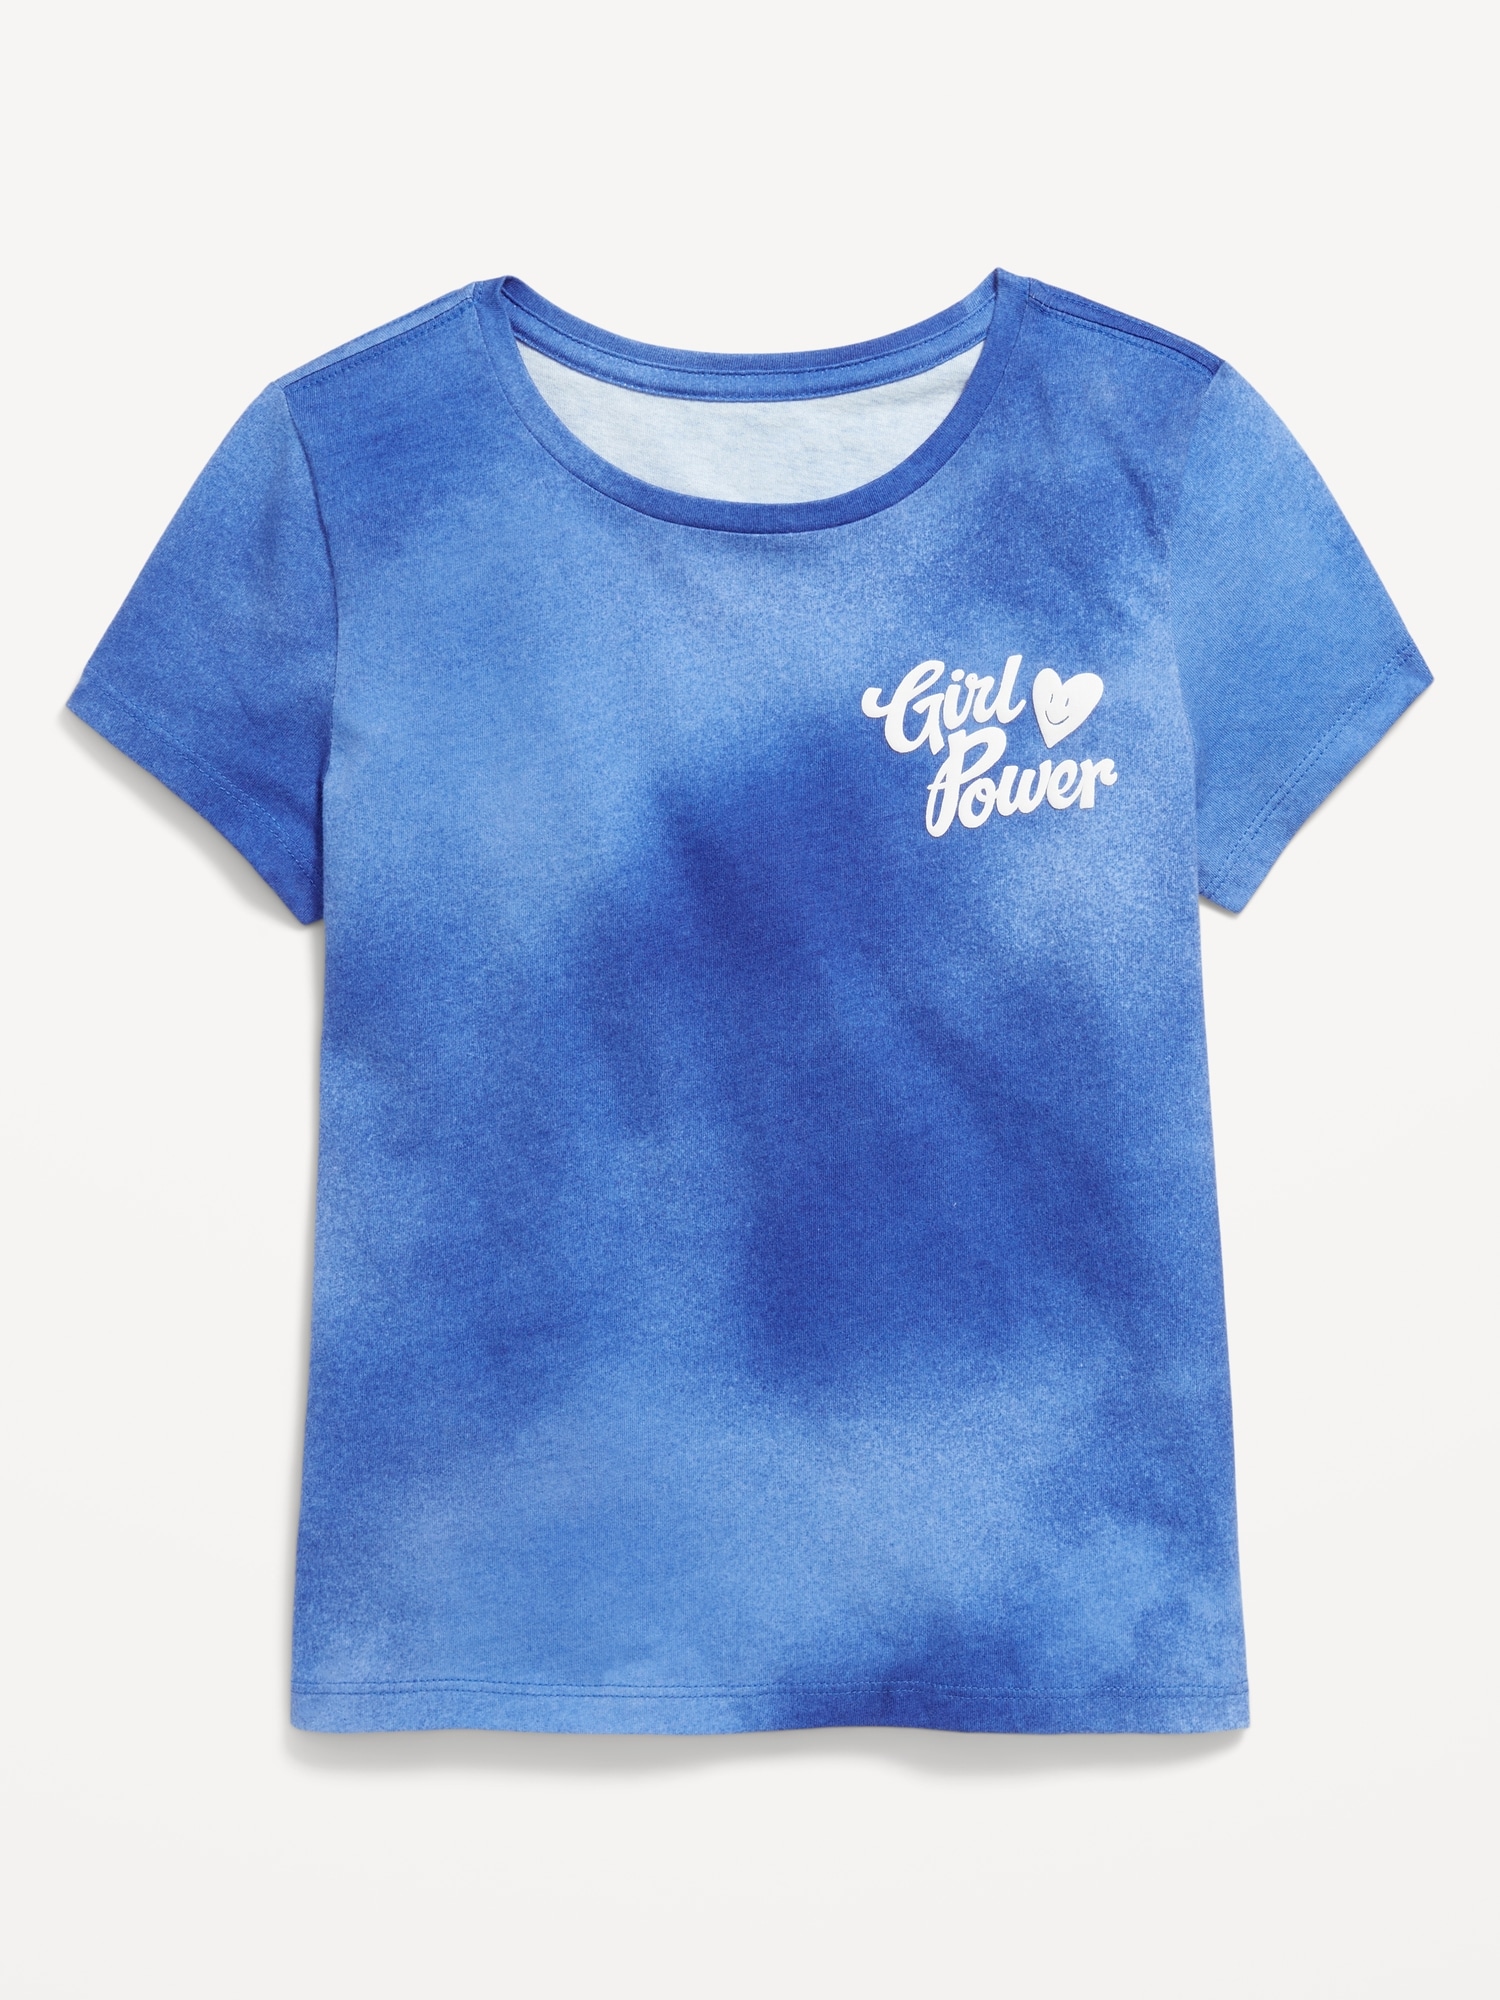 Short-Sleeve Graphic T-Shirt for Girls